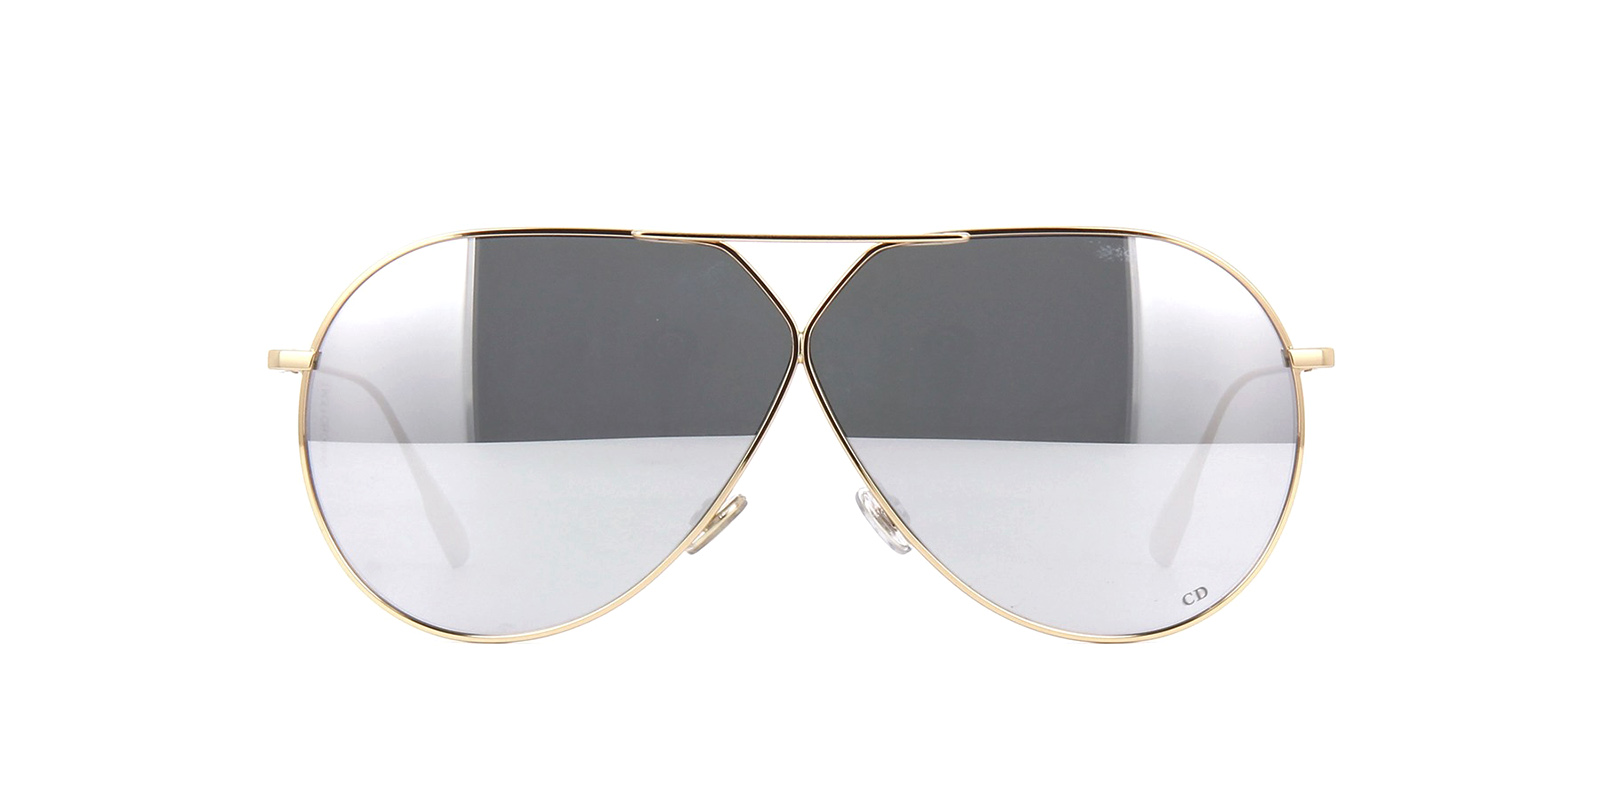 Buy Dior STELLAIRE 1 Champagne 5918145 Unisex Sunglasses at Amazonin